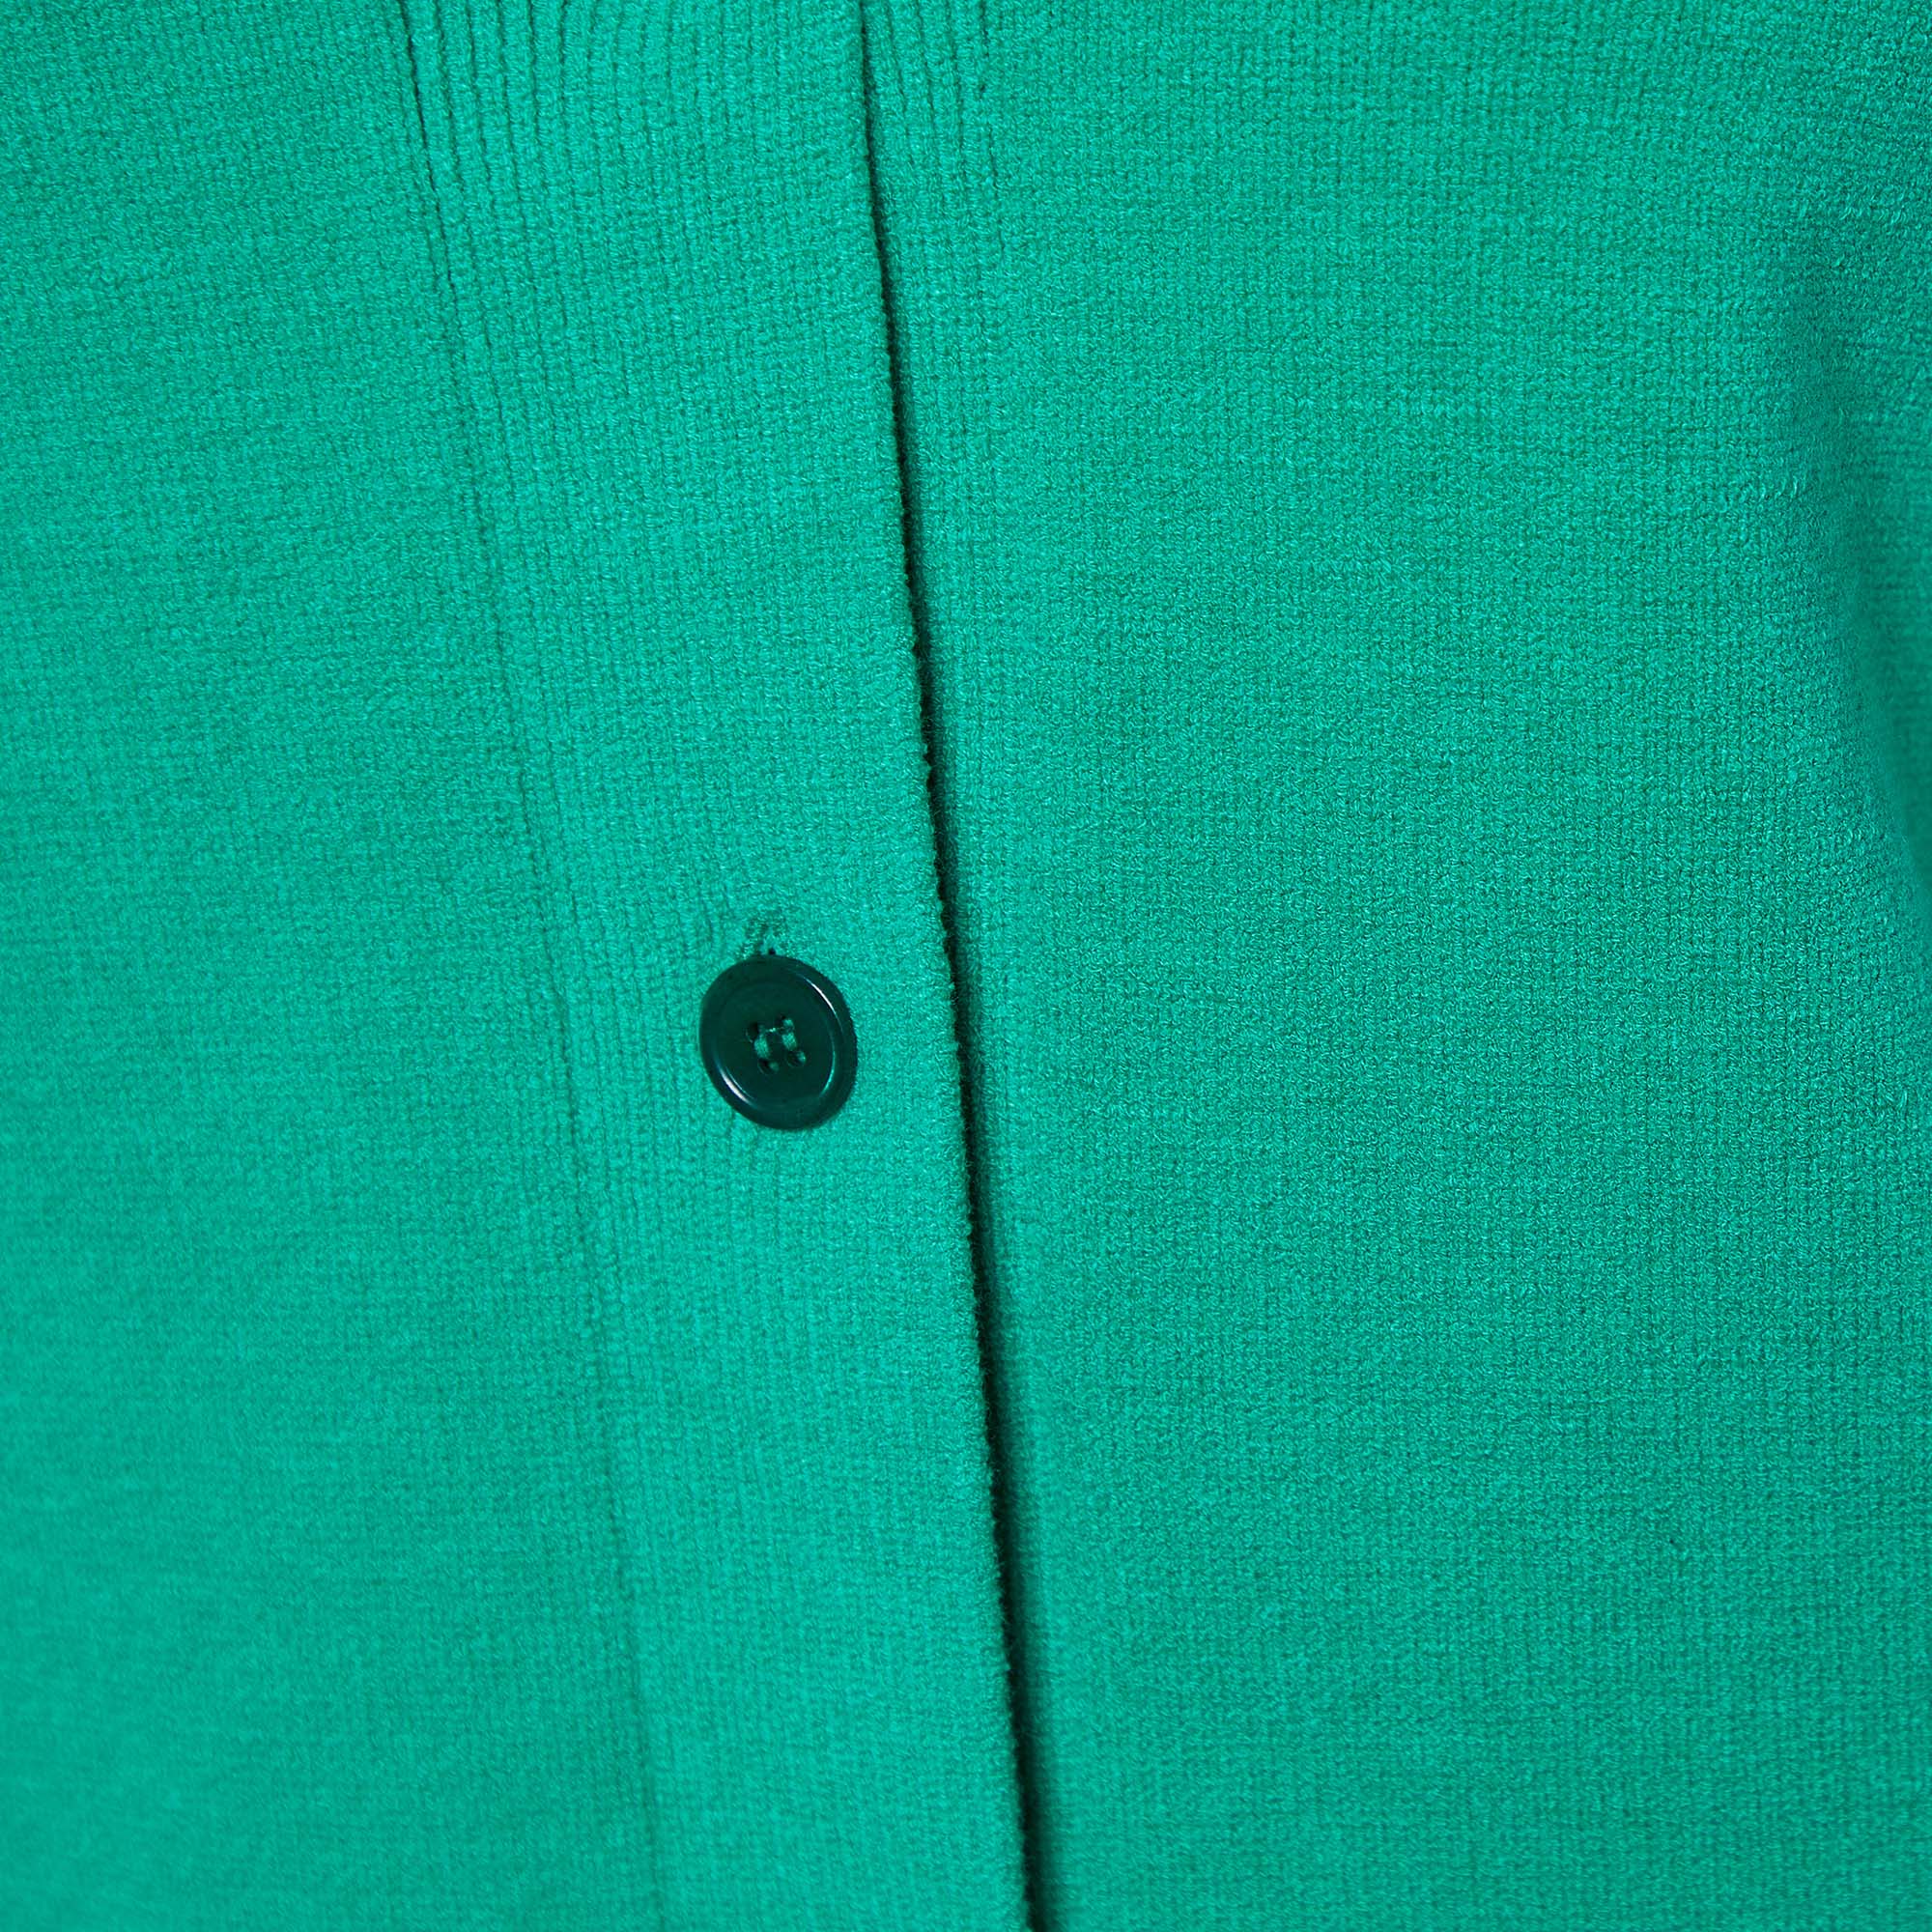 Marni Multicolor Cotton Knit Button Front Sweater S